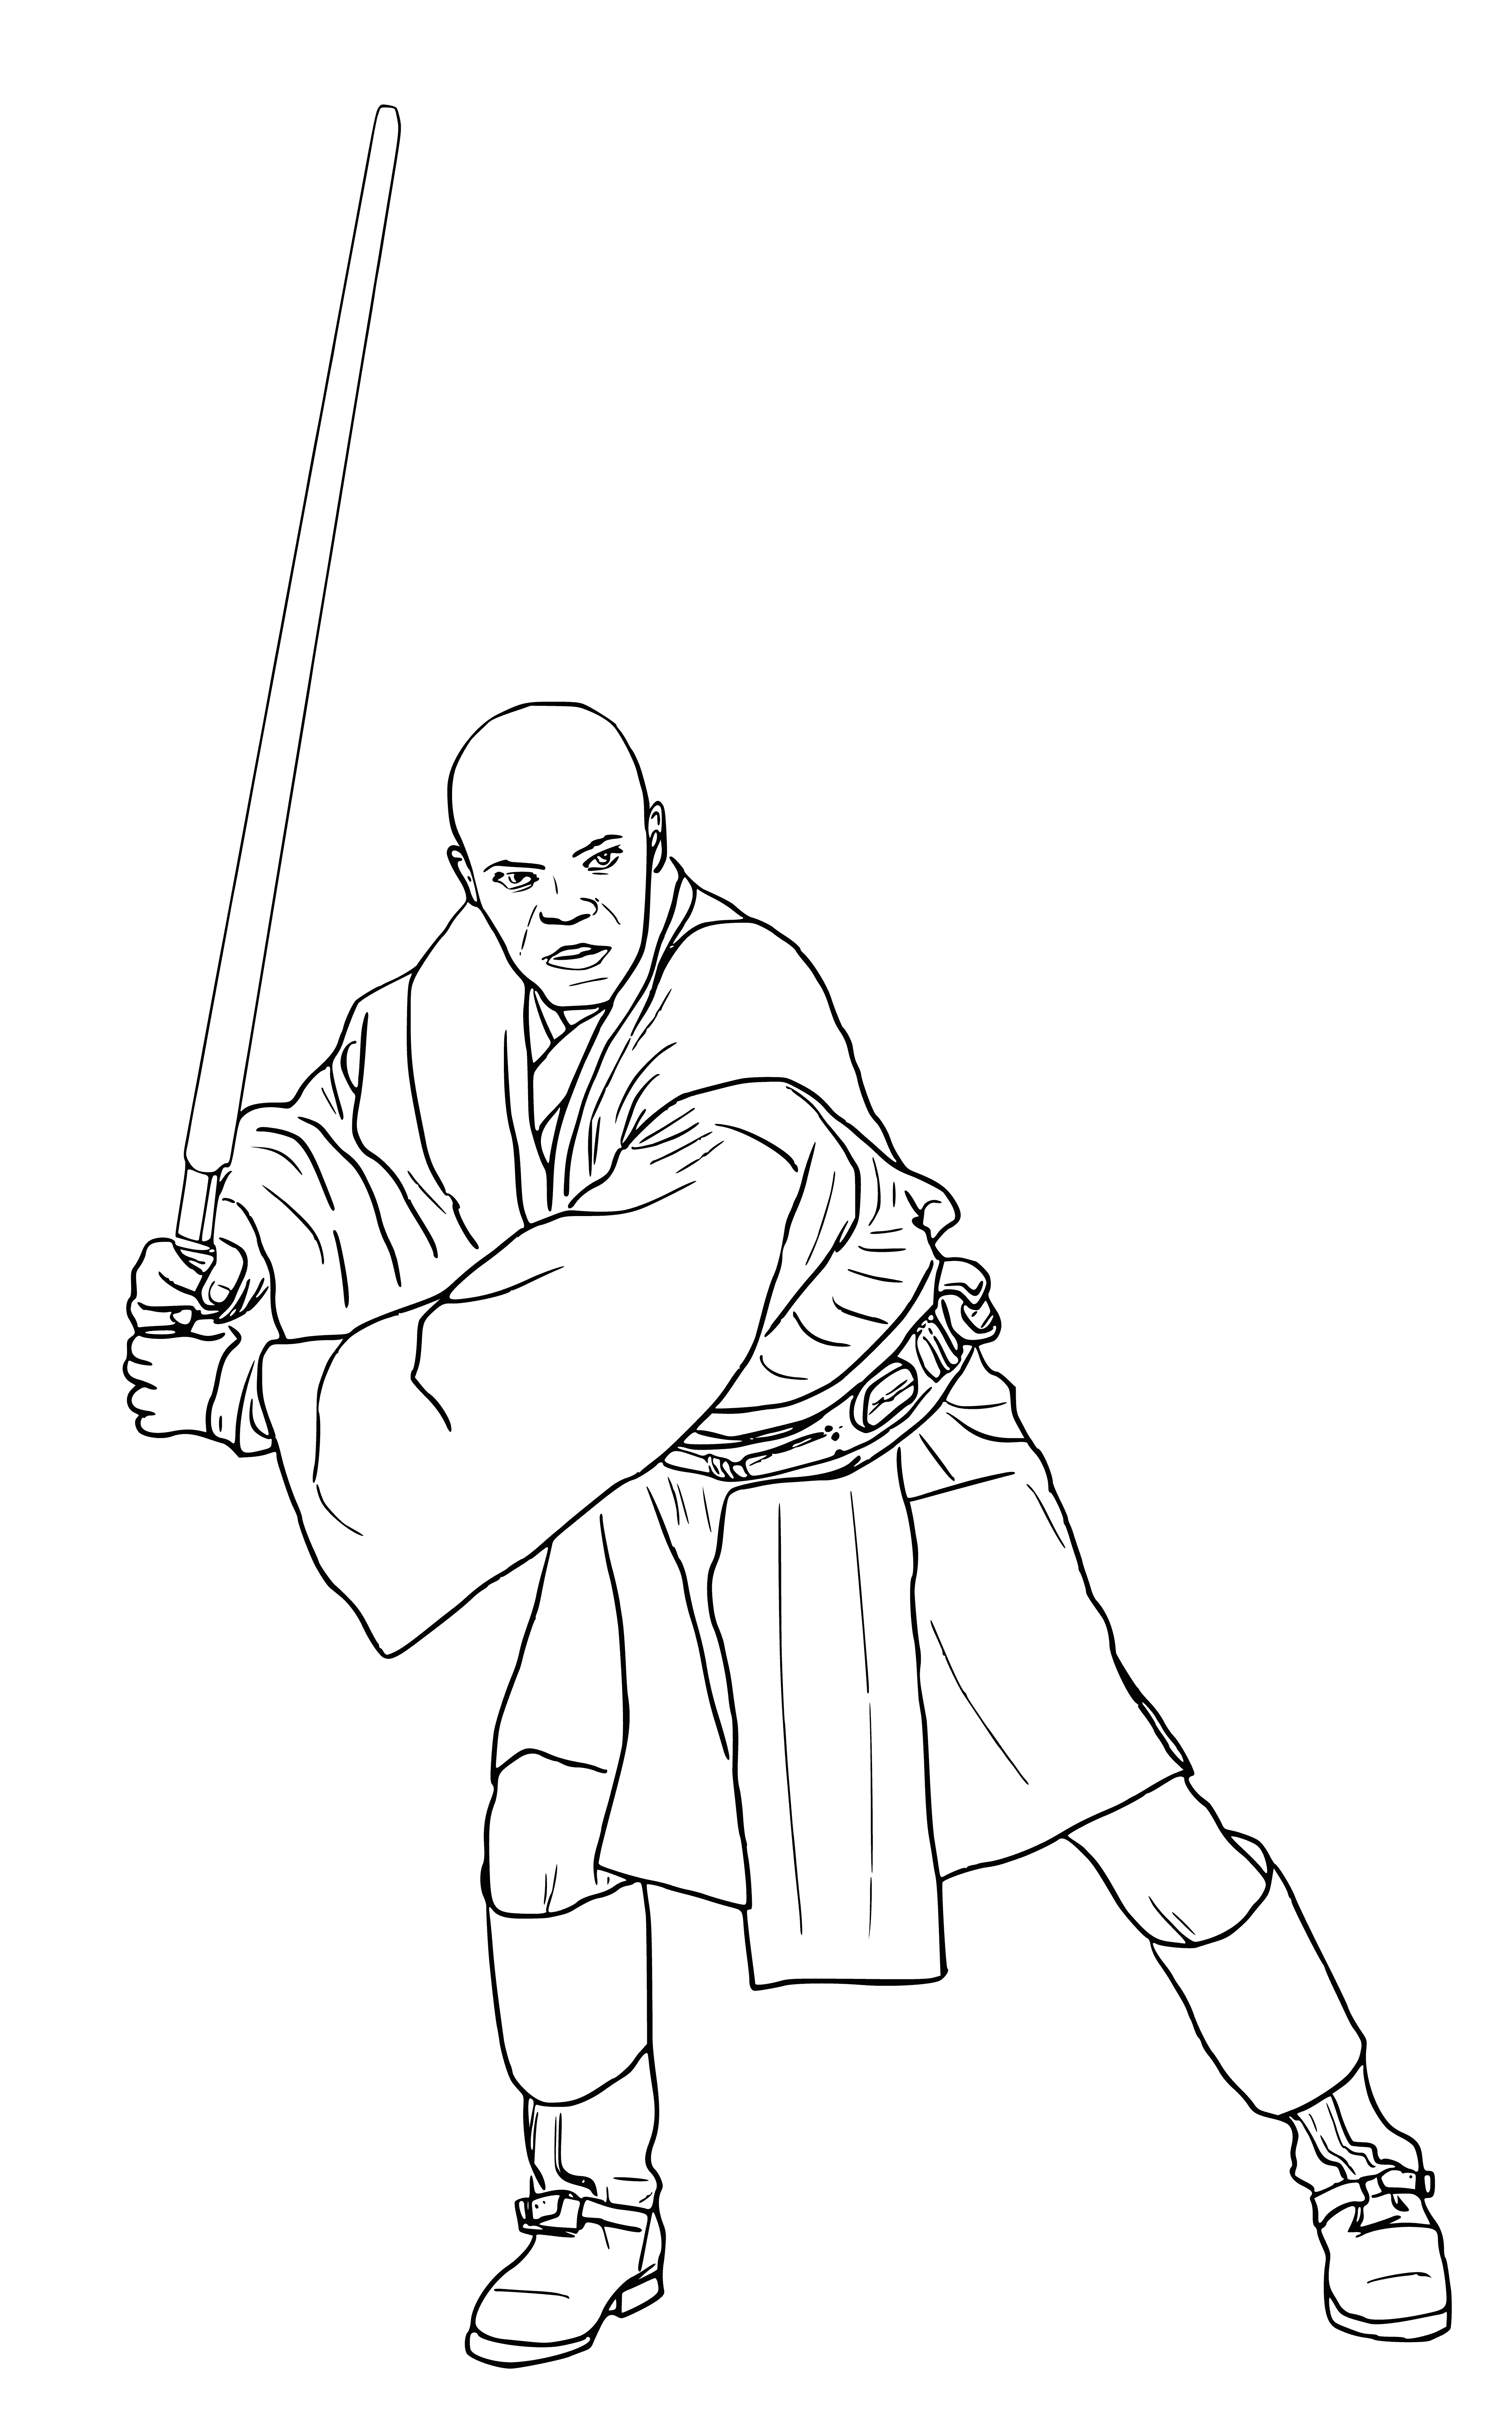 coloring page: Mace Windu is a Jedi Master in Star Wars wielding a blue lightsaber.